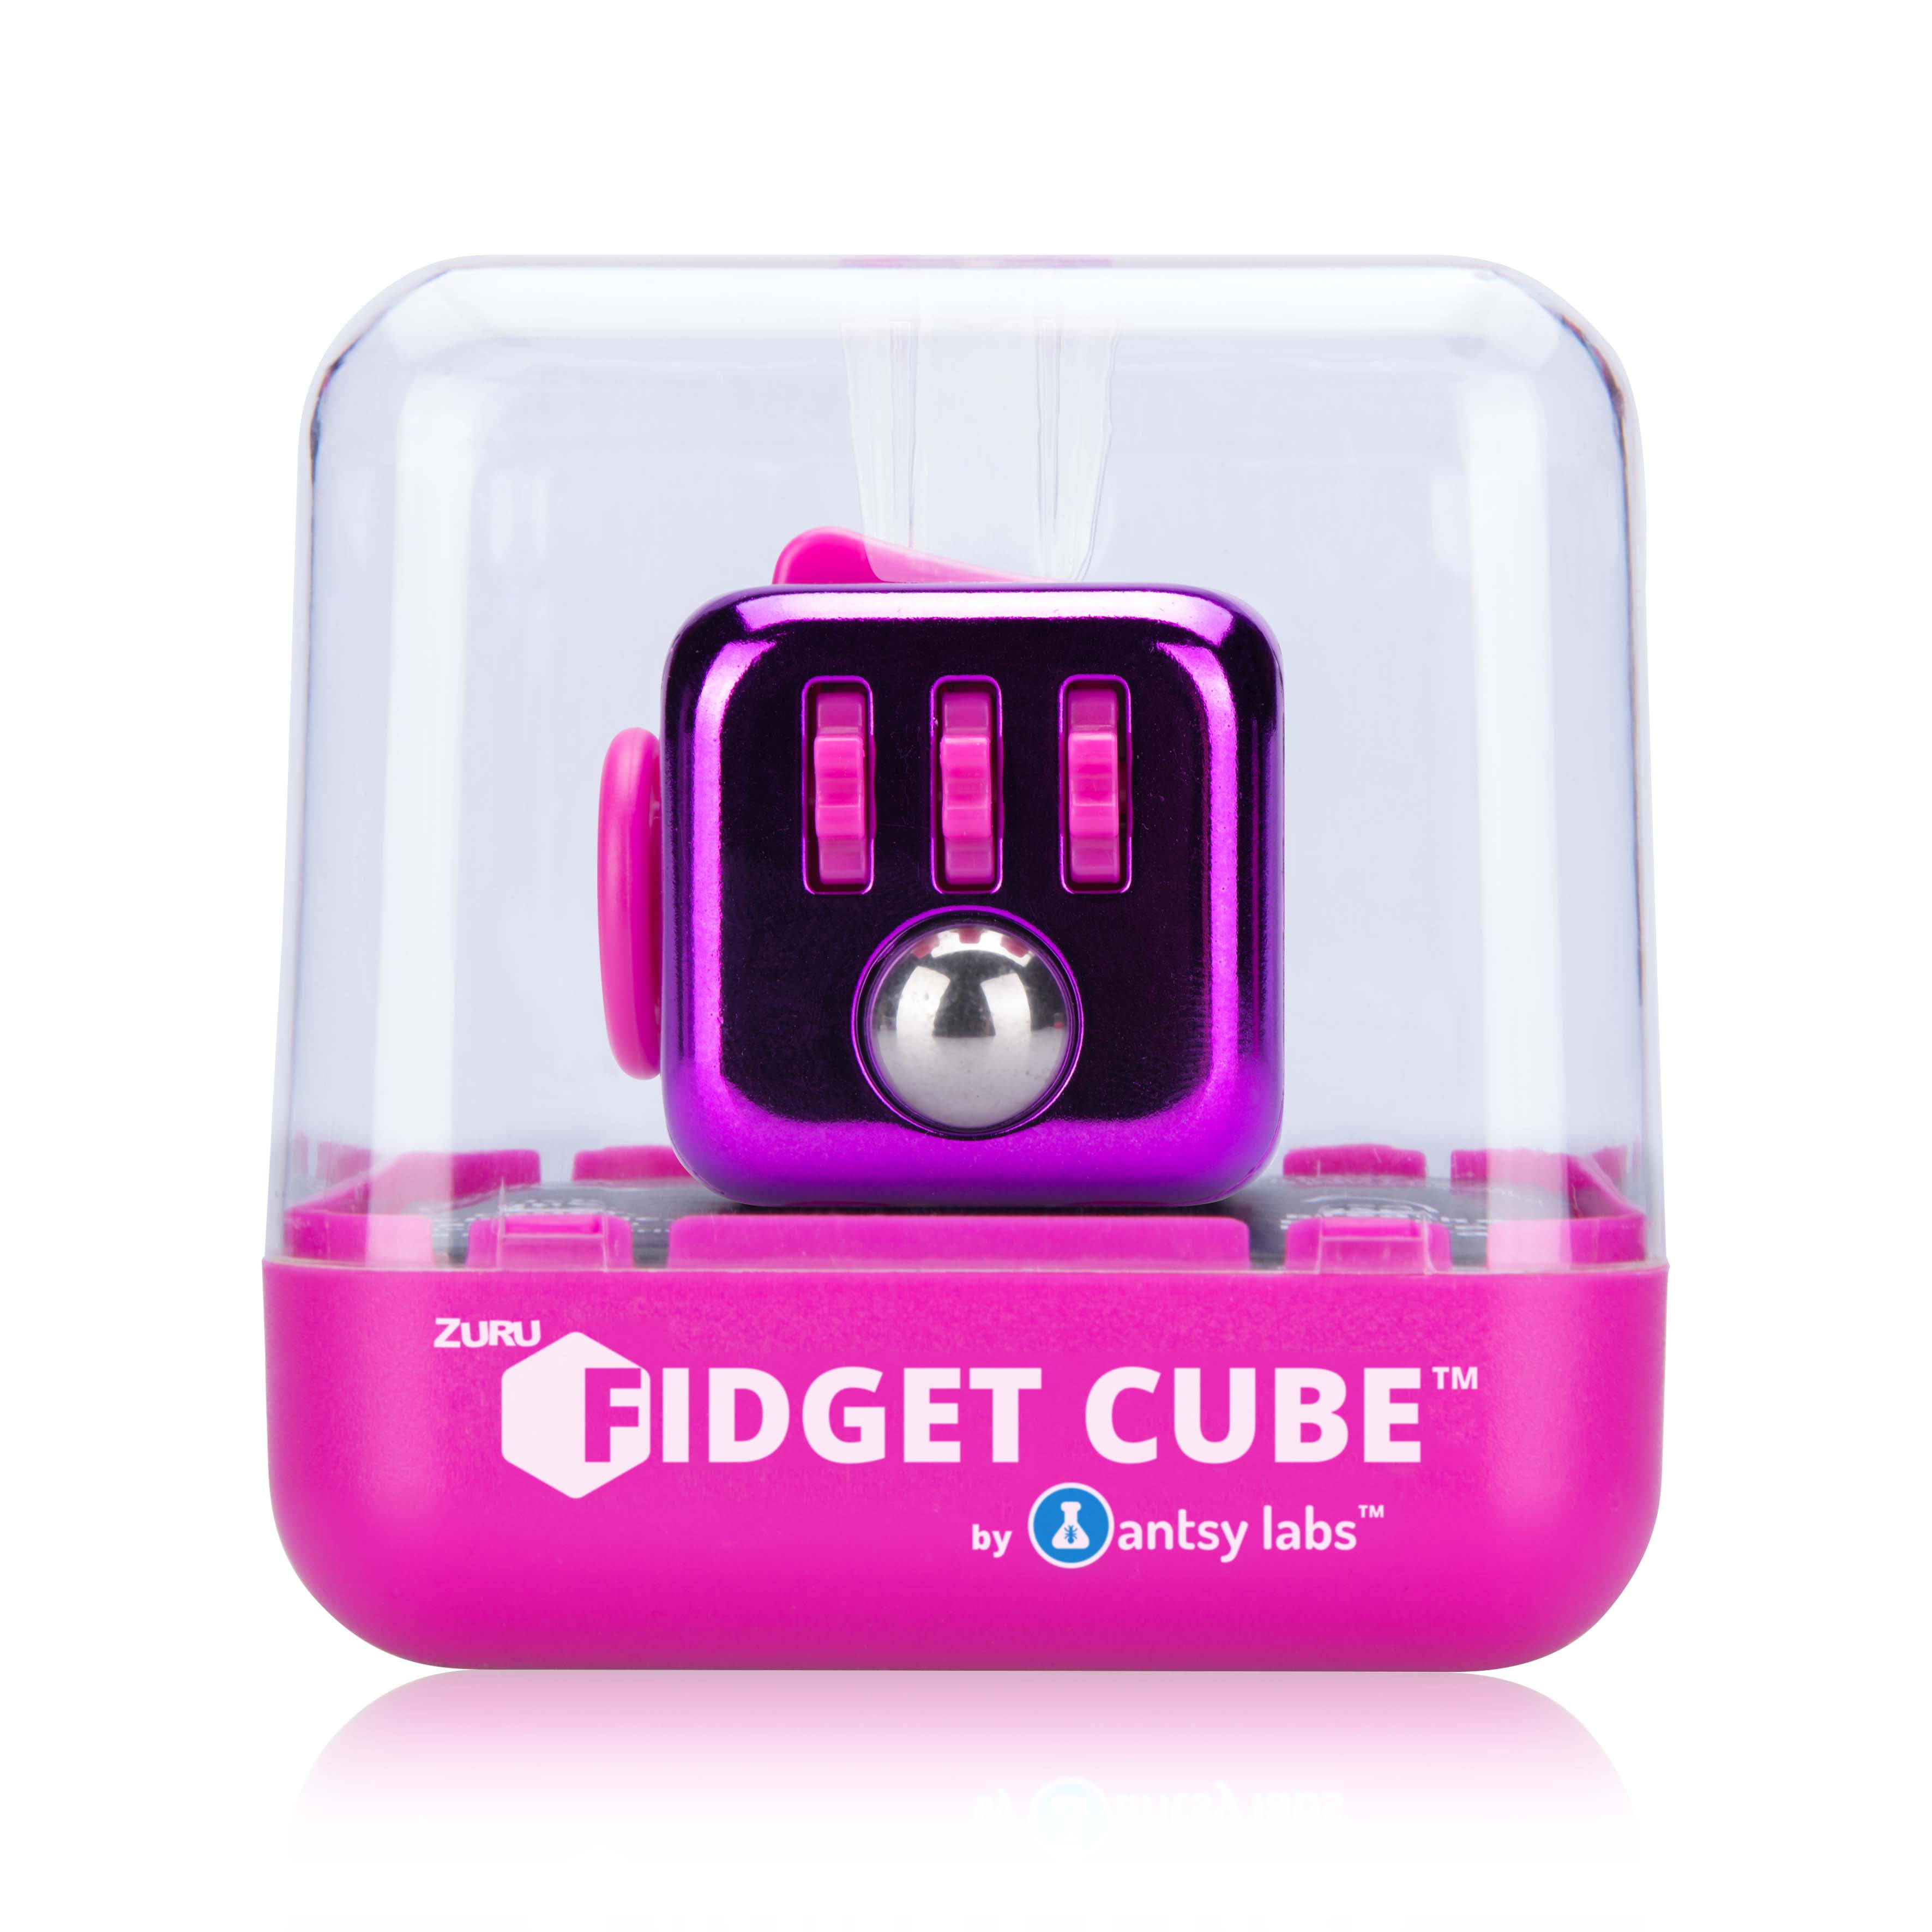 Lot of 4 Zuru Original Fidget Cube by Antsy Labs Various Colors as Shown Easter 